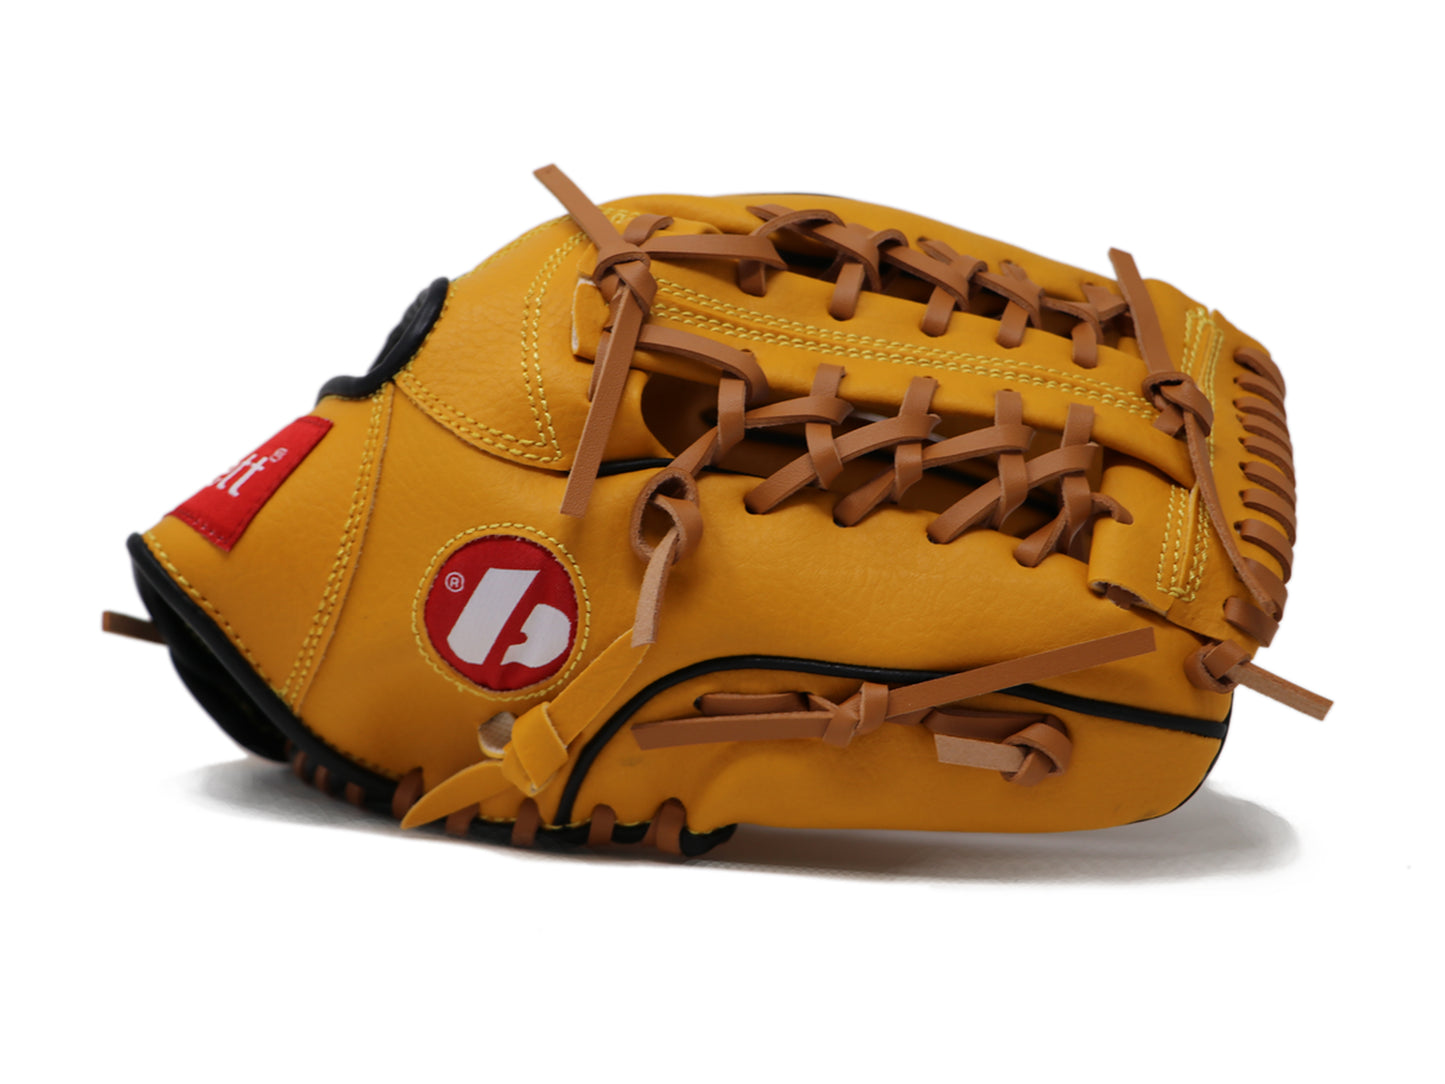 JL-120-Baseballová rukavice, outfield, polyuretan, velikost 12,5", TAN